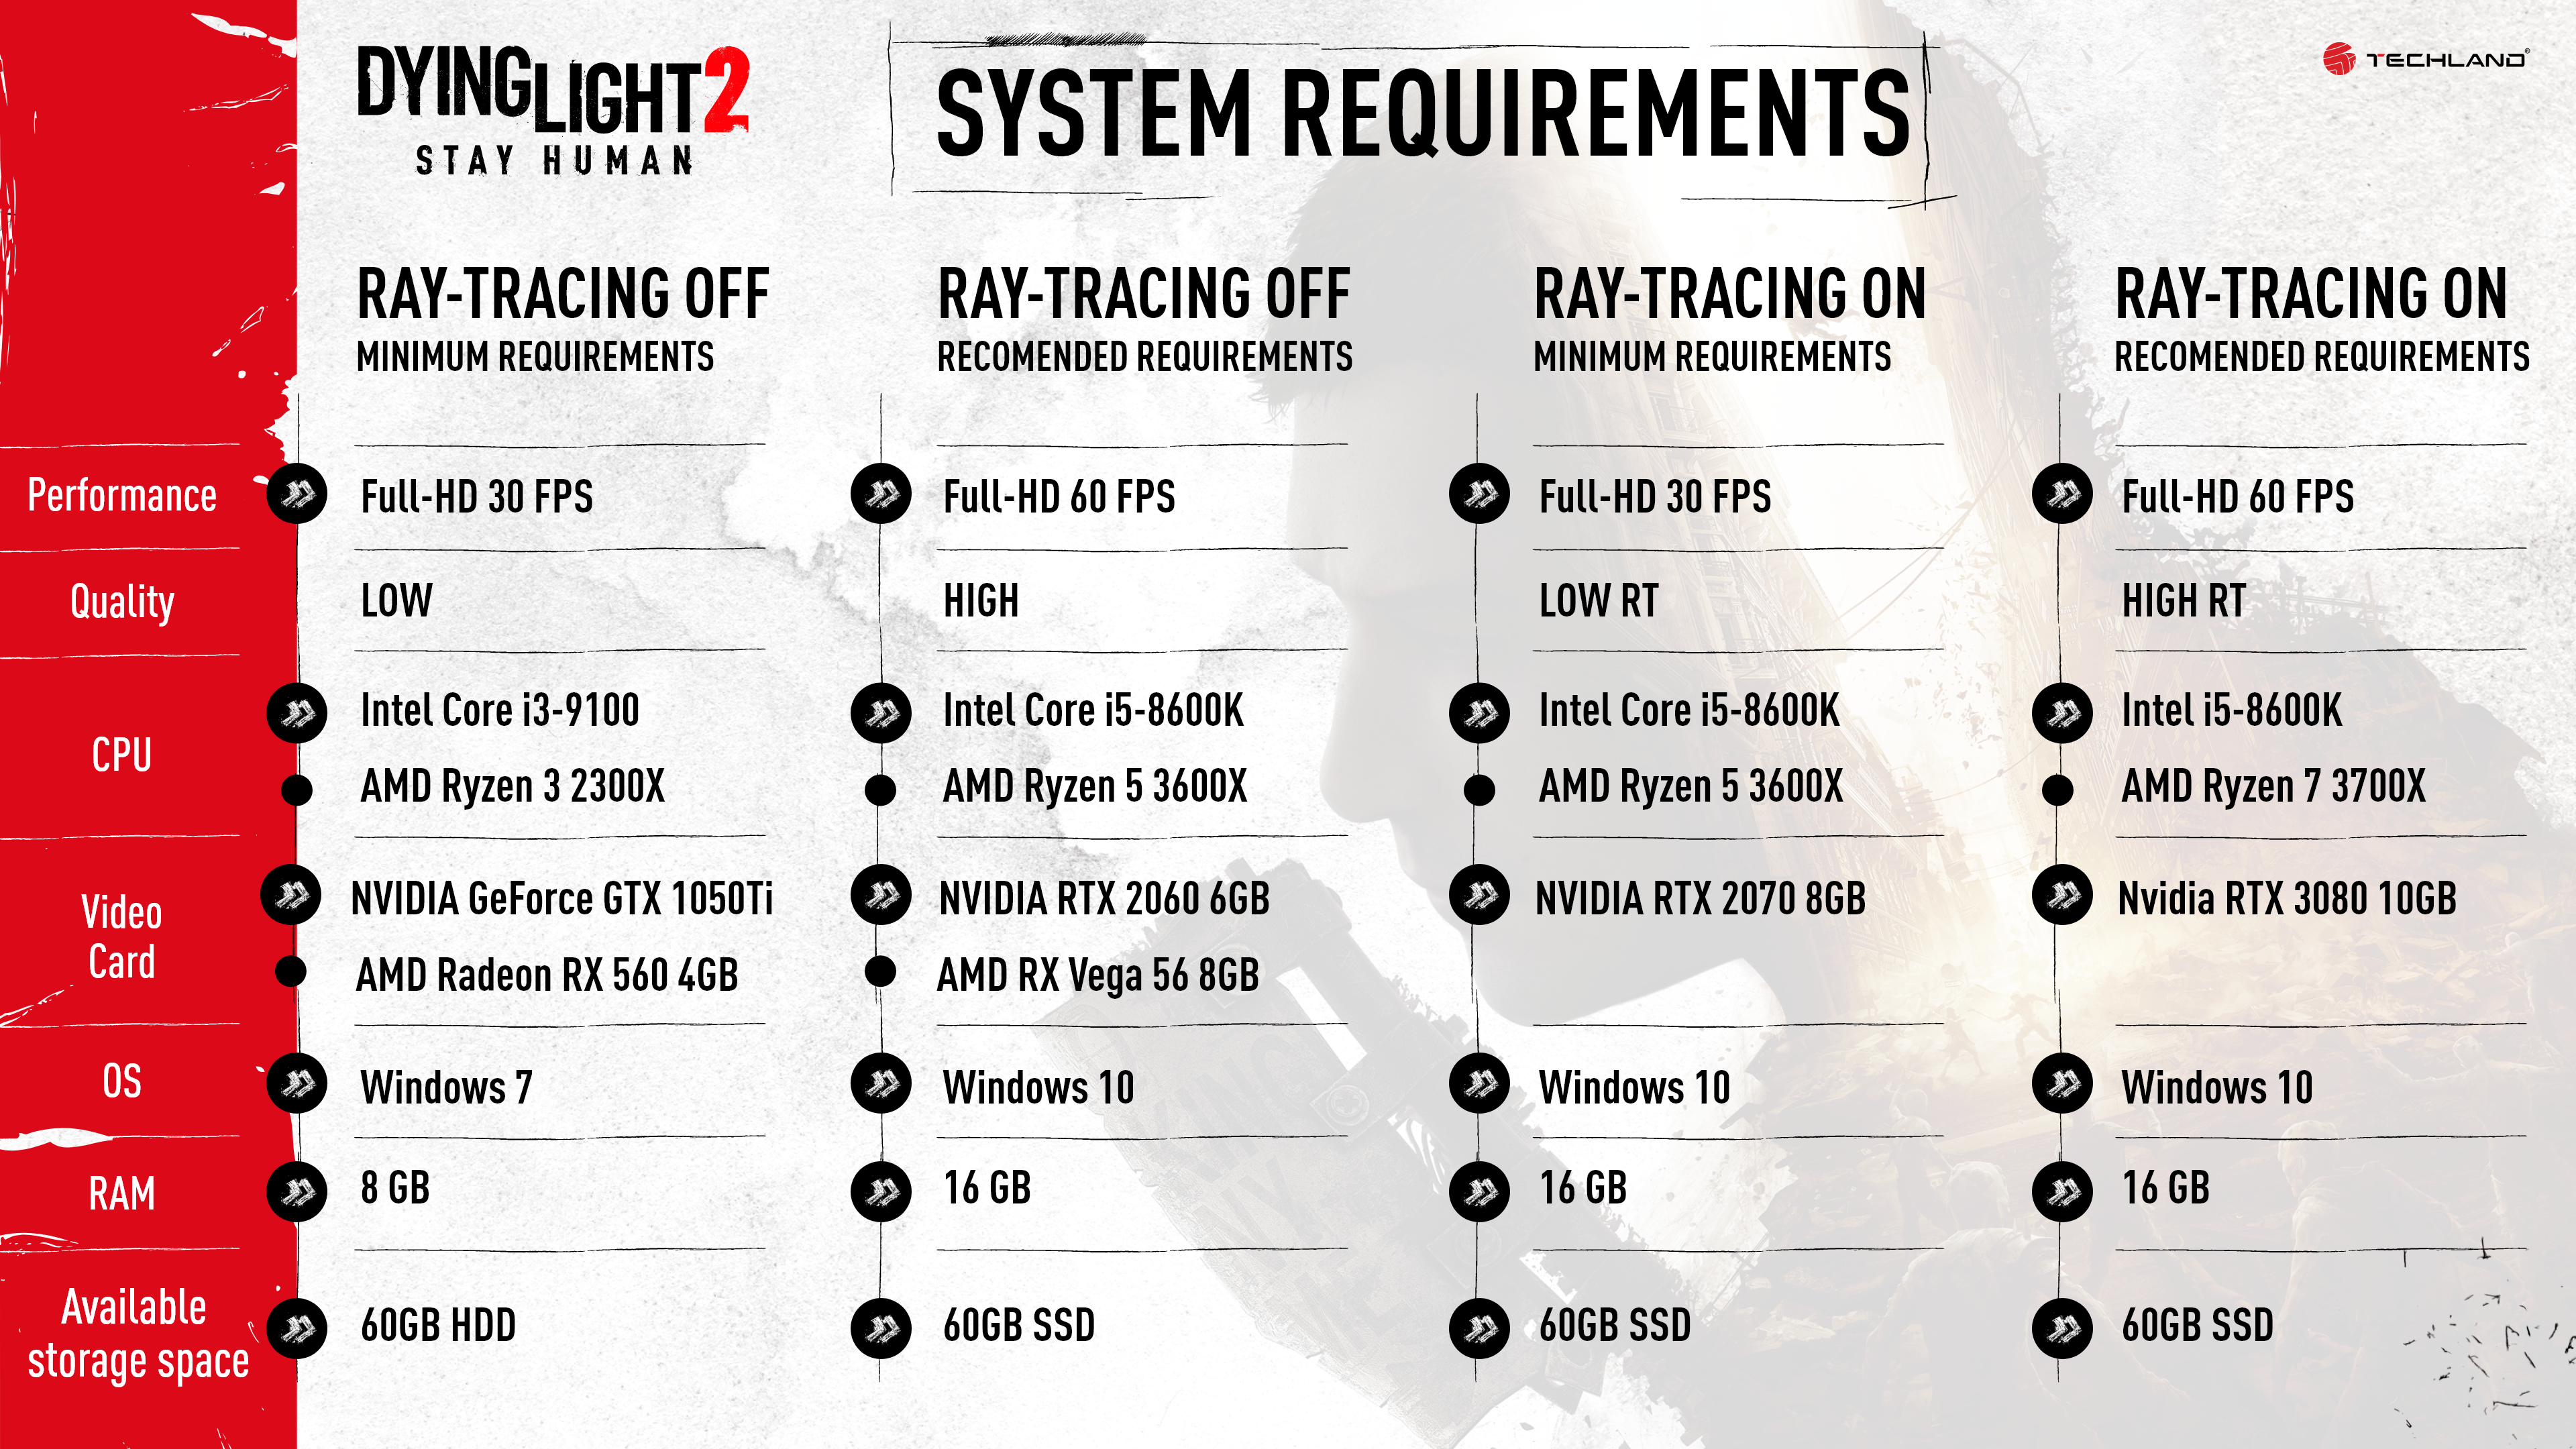 afregning på en ferie konkurs Dying Light 2 PC Specs Revealed For Your PC Undead Slaying Needs - GameSpot